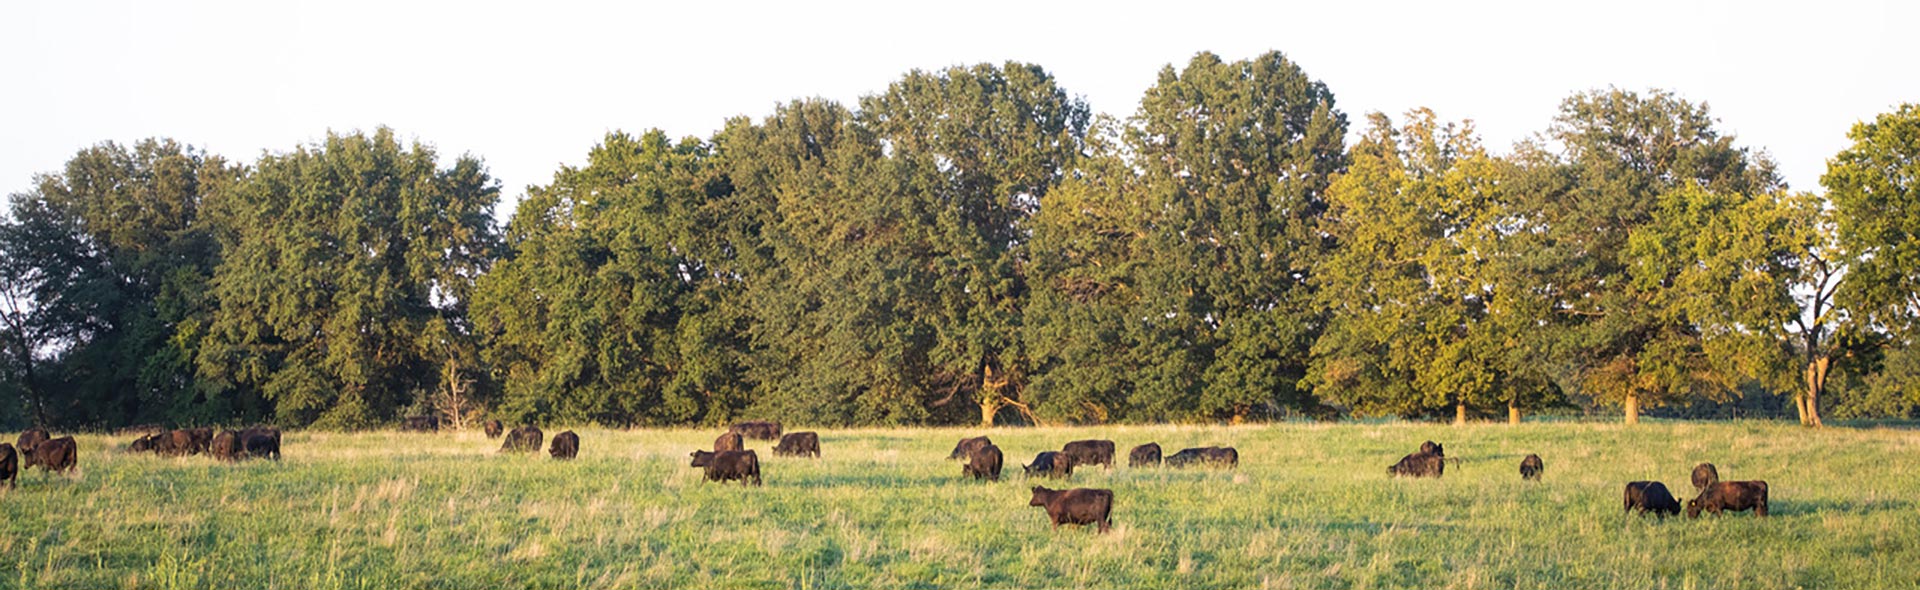 Cows in a field in summer